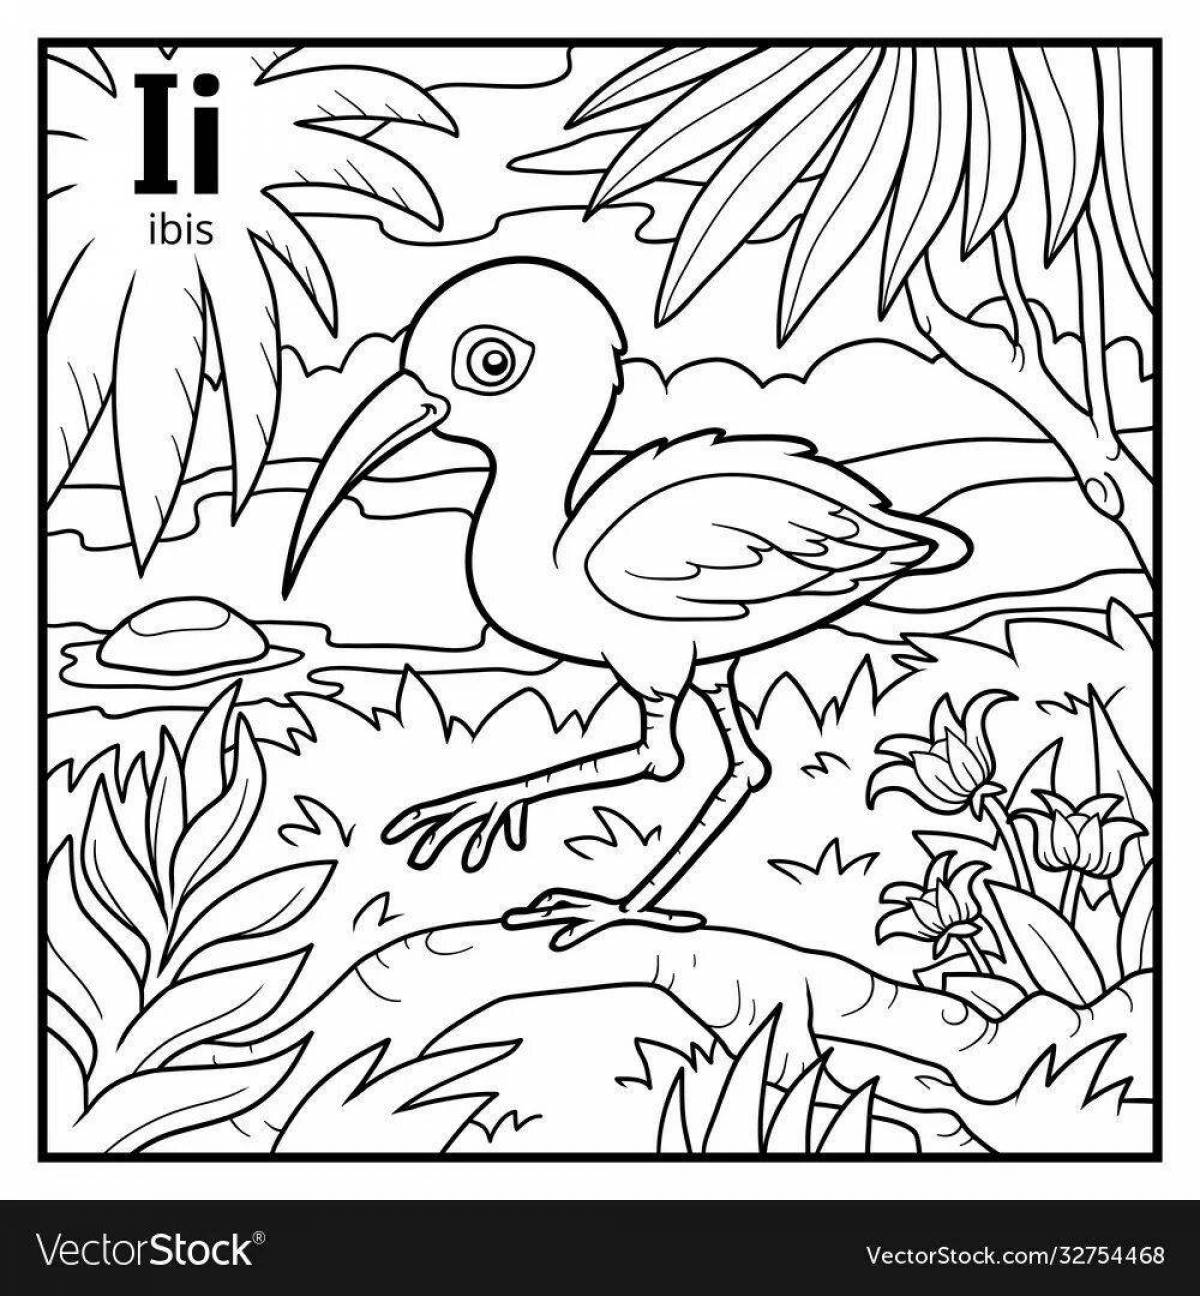 Ibis paint humorous coloring